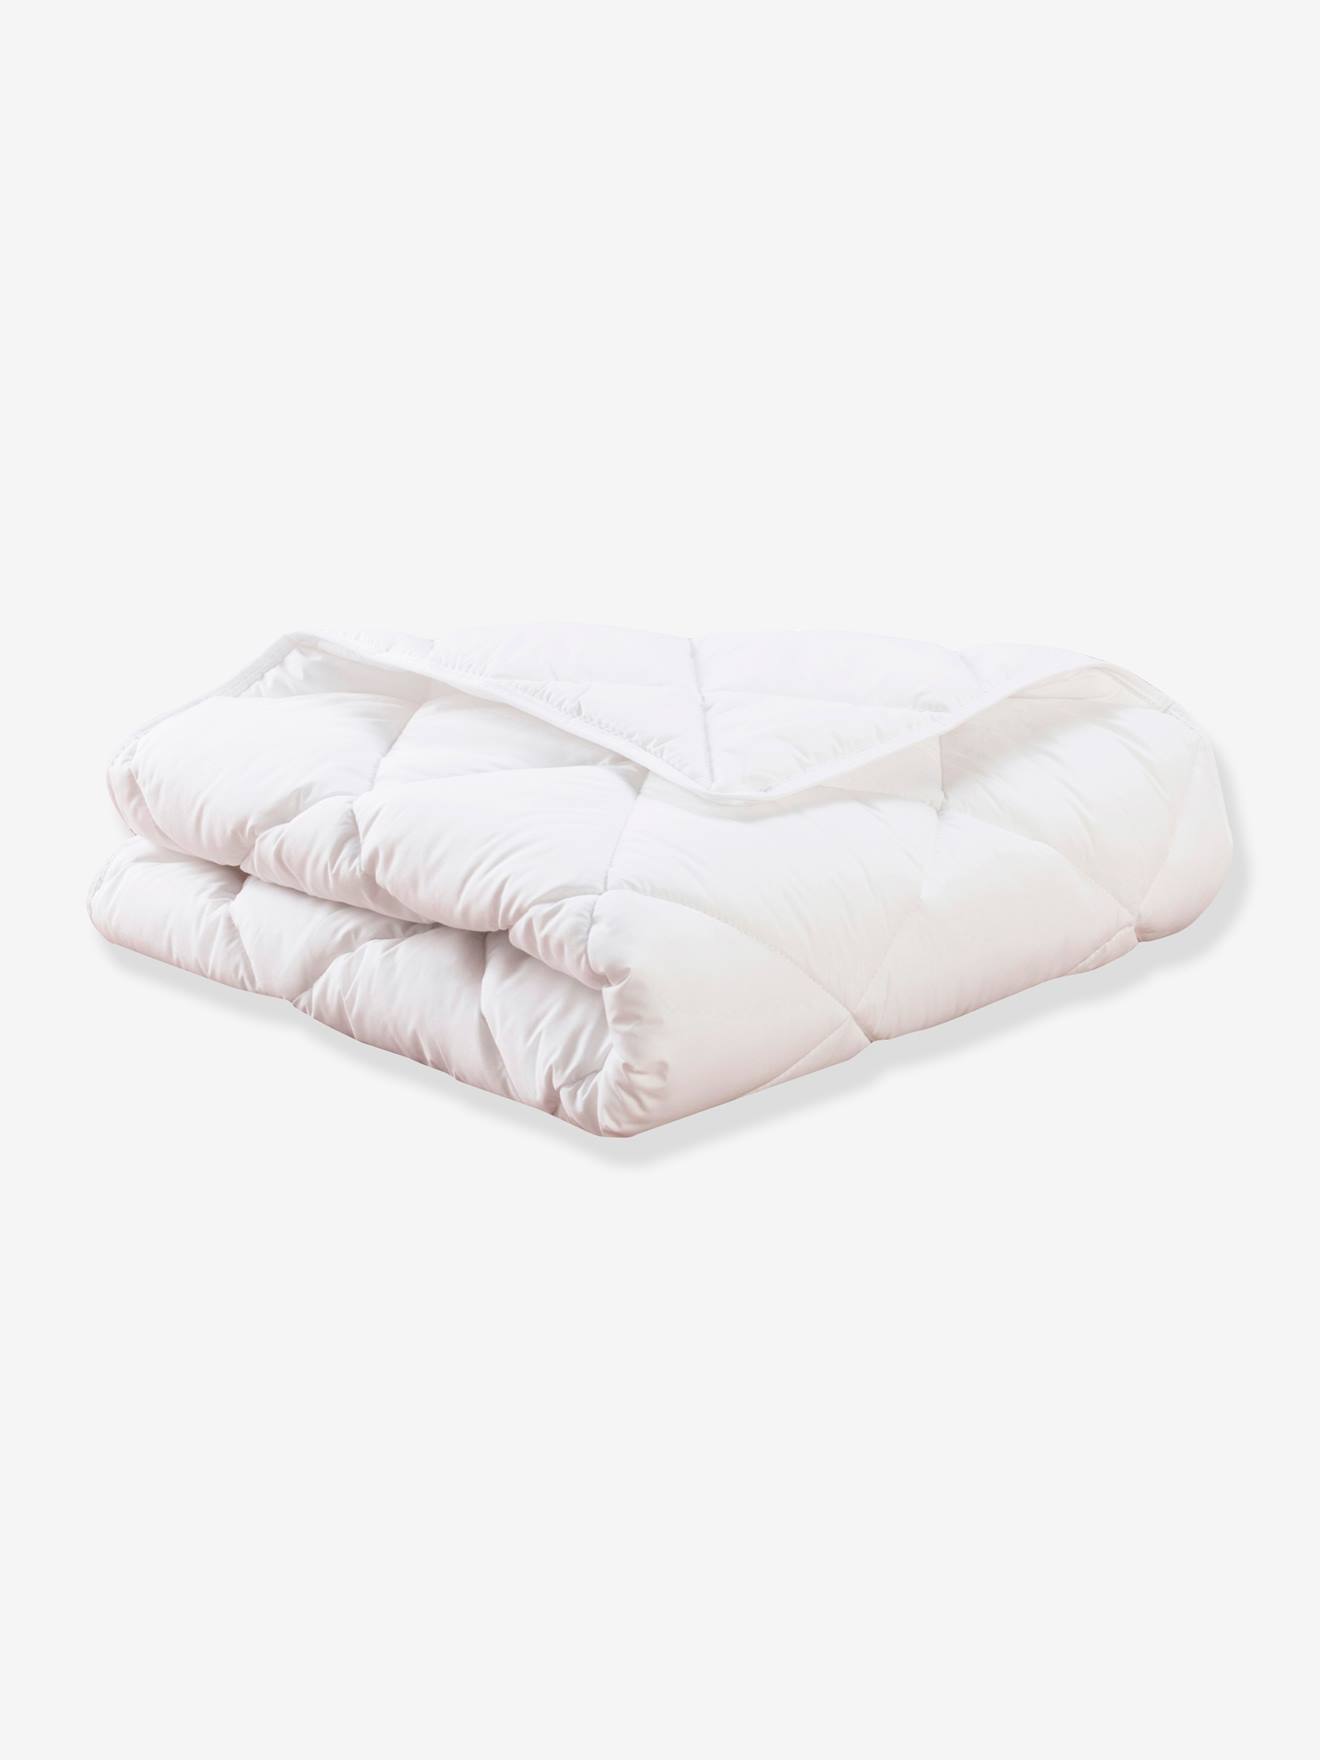 Mi pequeño colchón algodón orgánico desenfundable 60x120 cm P'TIT LIT  blanco claro liso - P'tit lit